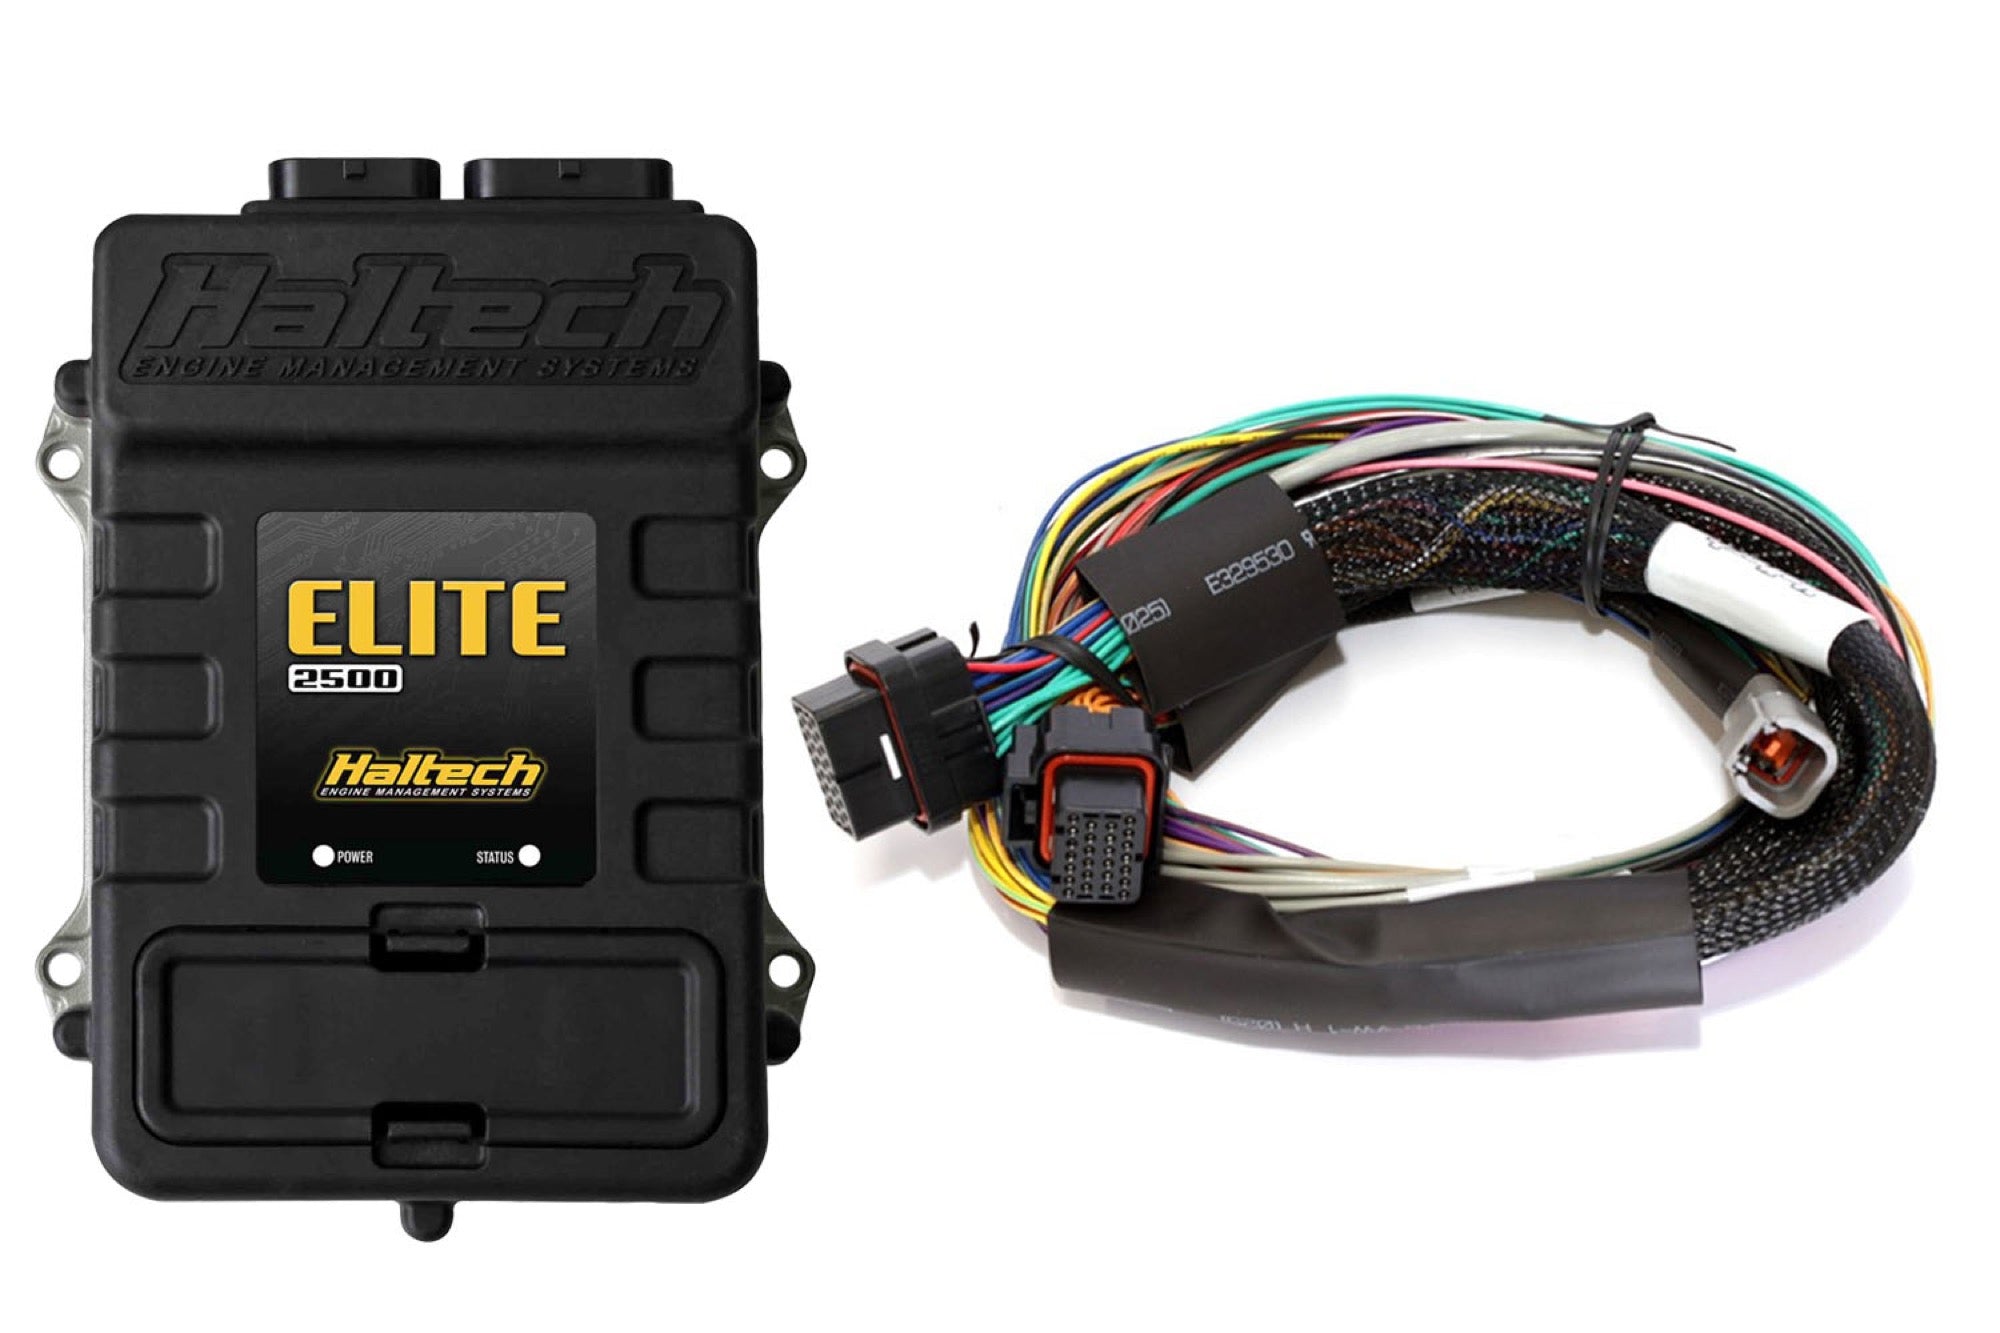 Haltech Elite 2500 + Basic Universal Wire-in Harness Kit 2.5m (8’) HT-151302